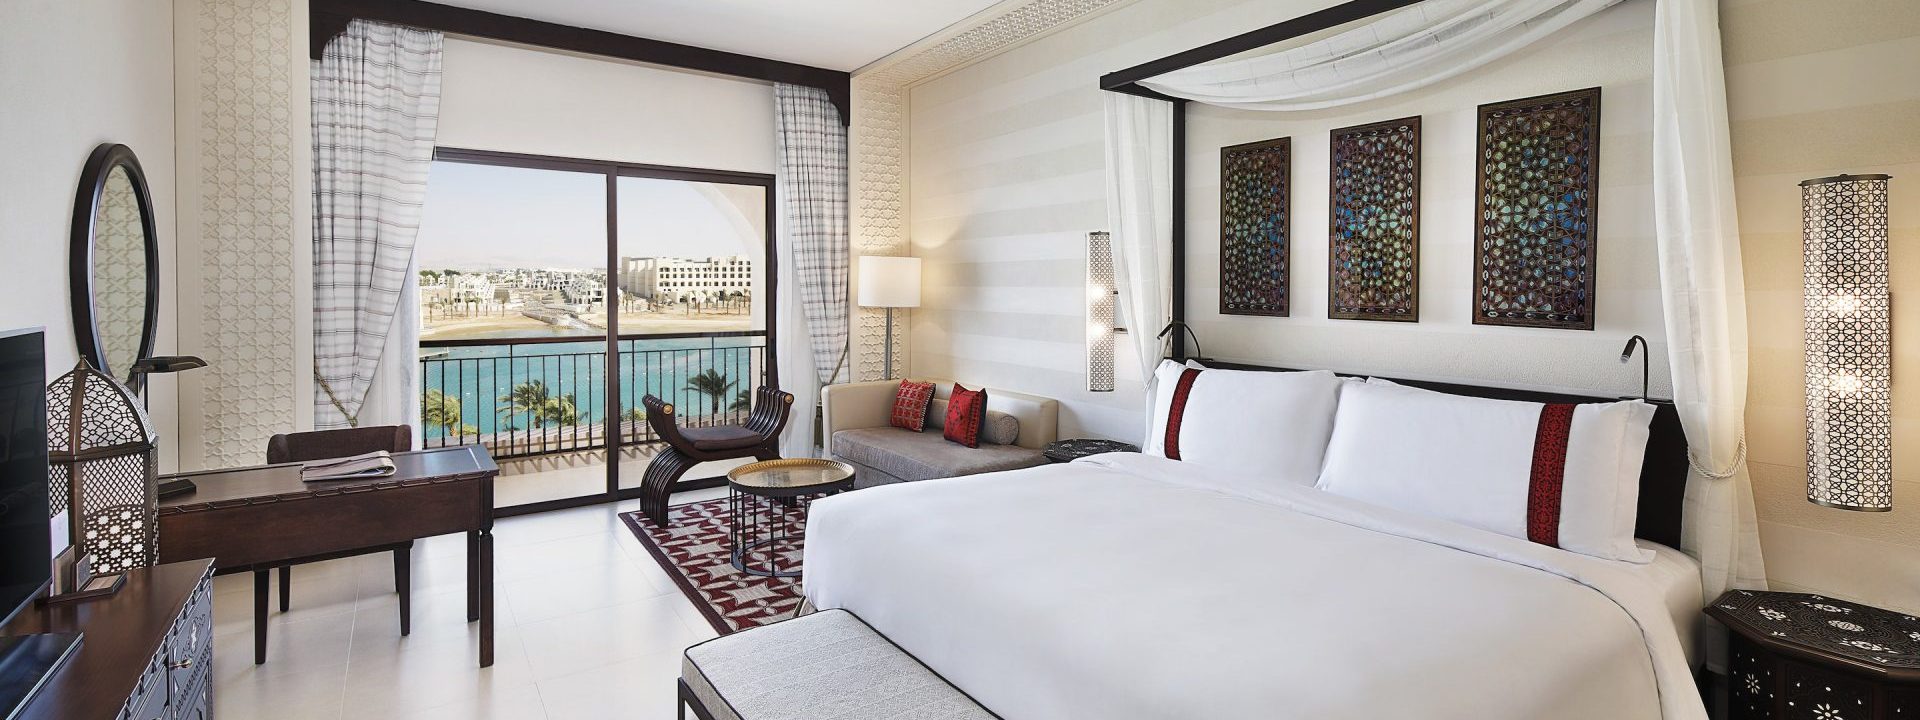 Marriott opens its first Luxury Collection hotel in Jordan, Al Manara